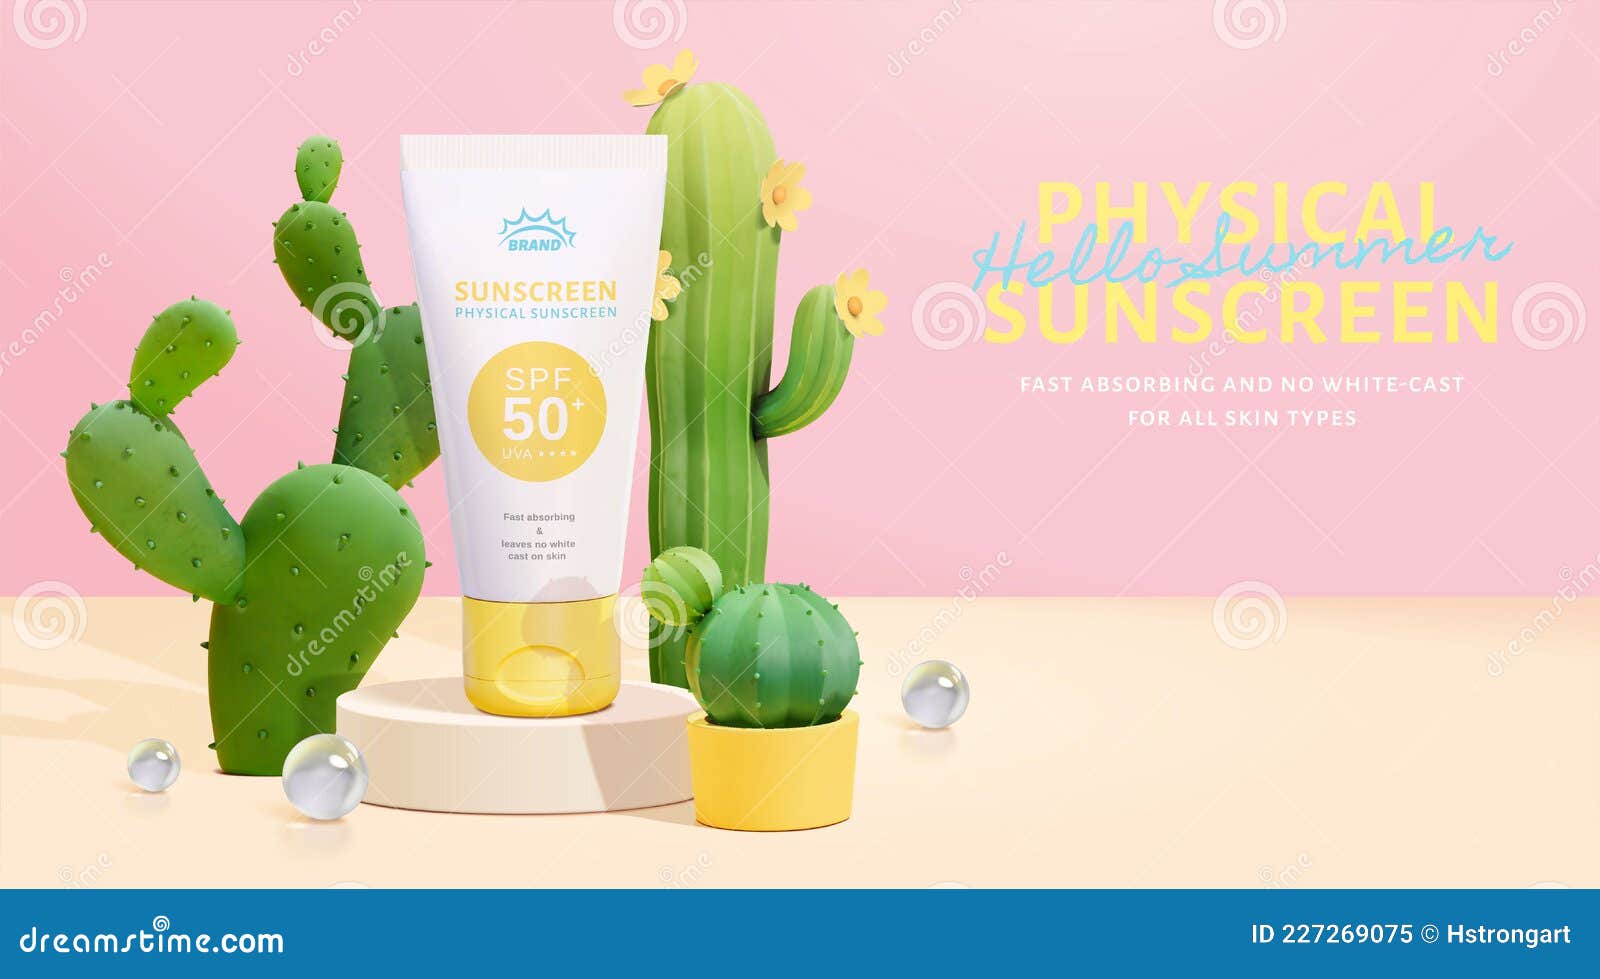 sunscreen ad in cute cactus theme